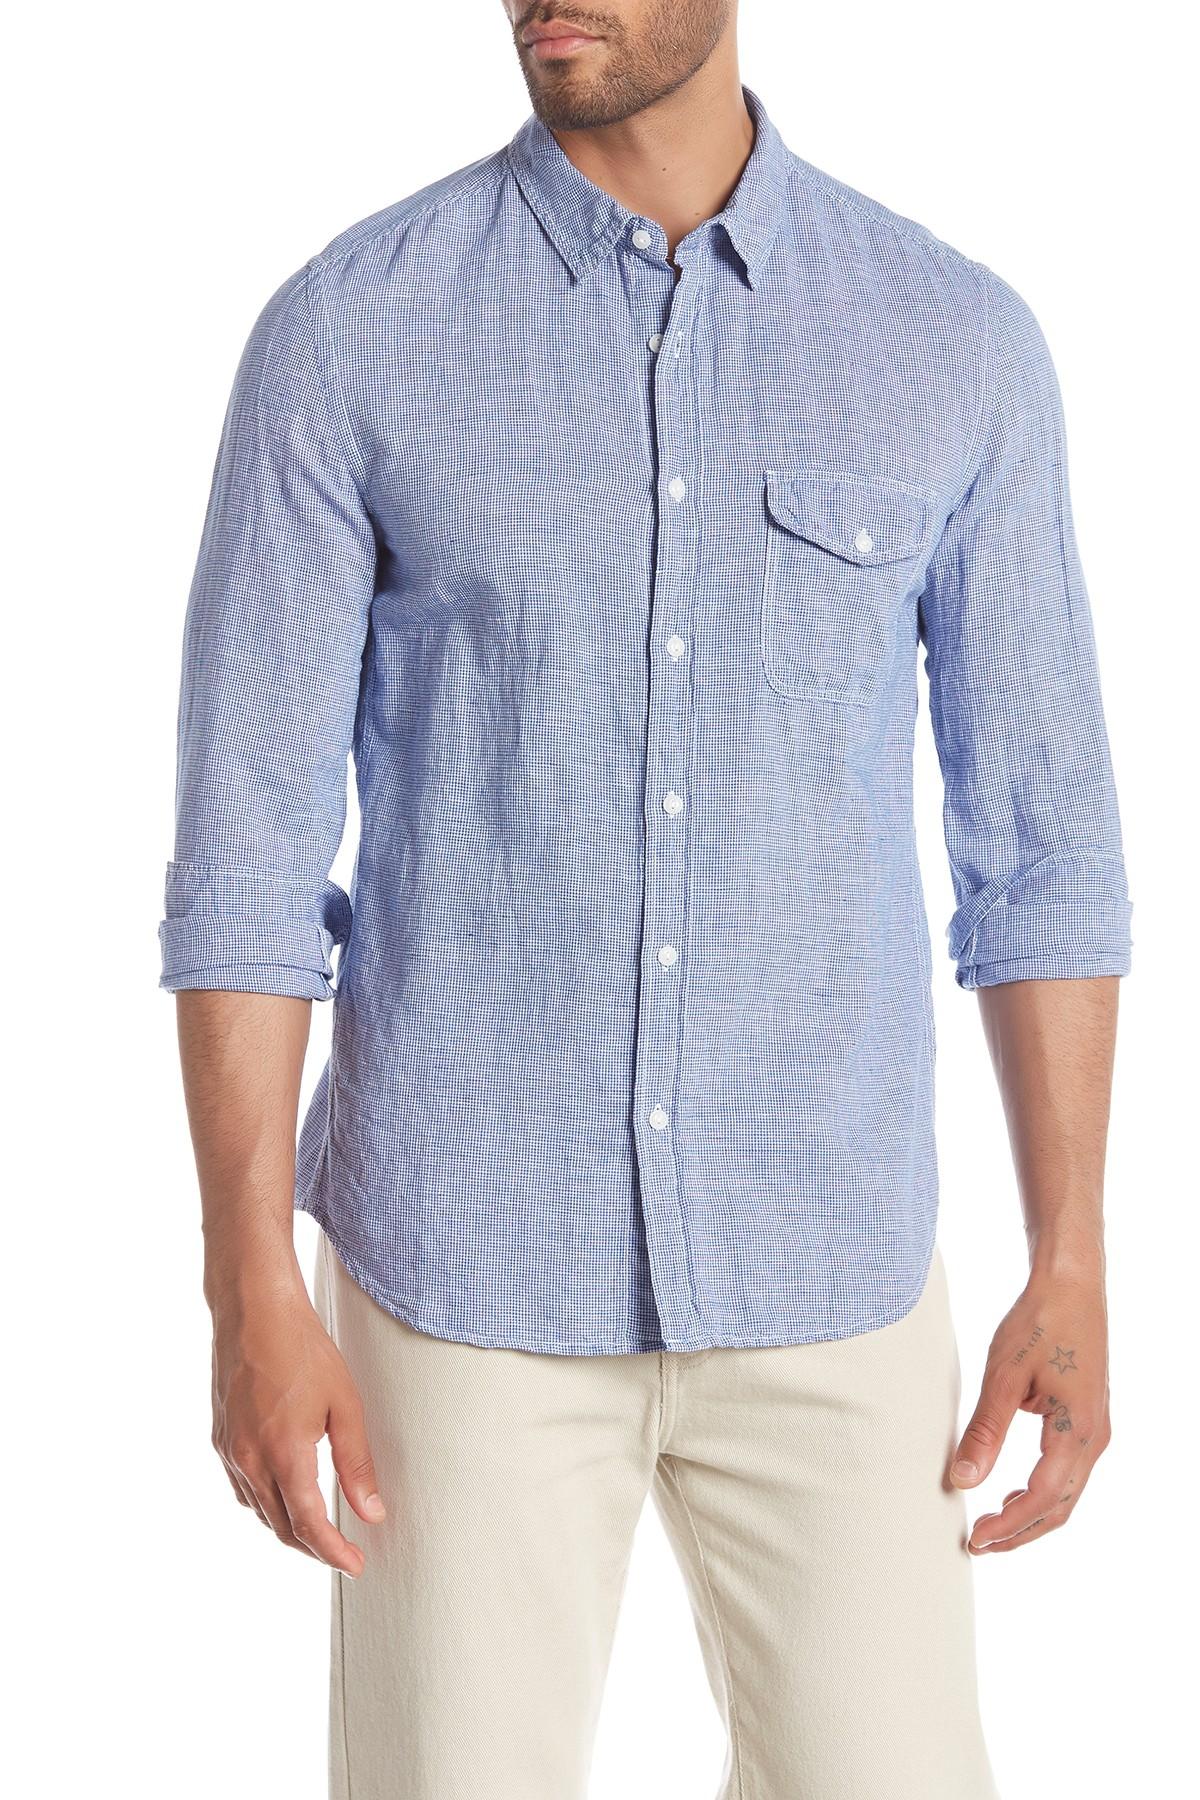 Save Khaki Houndstooth Work Shirt in Platinum (Blue) for Men - Lyst